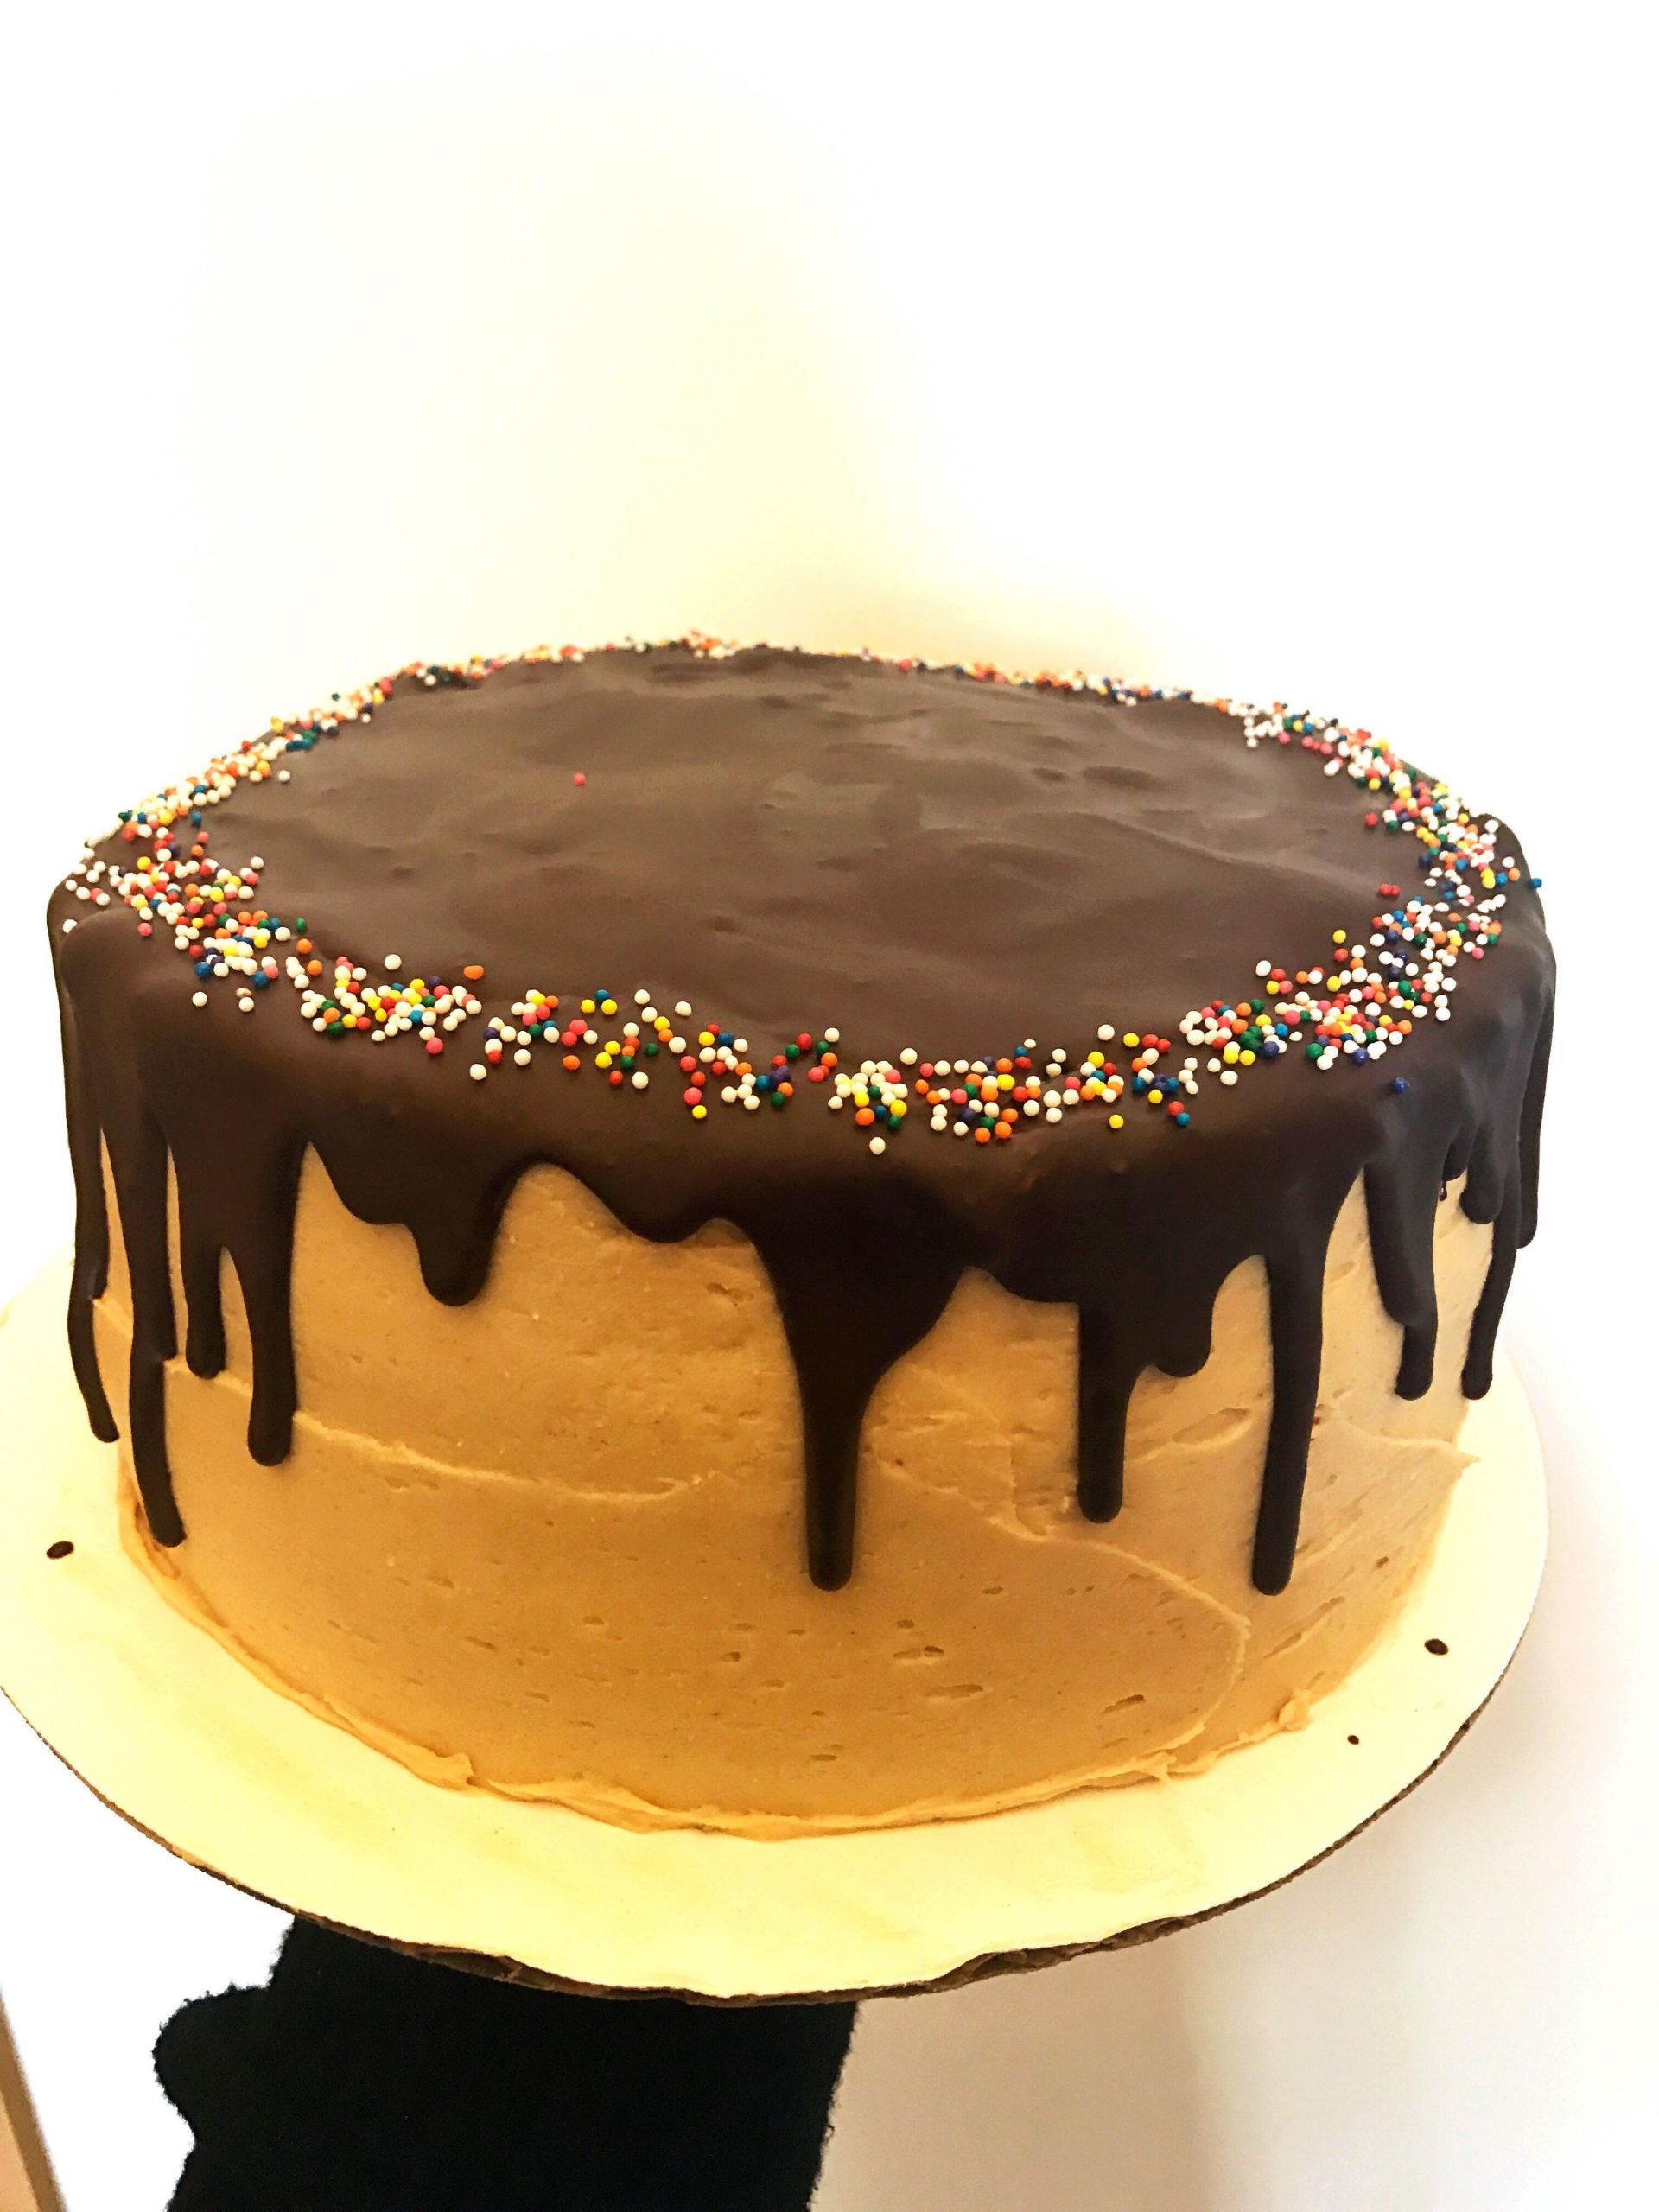 Peanut Butter Birthday Cake
 Chocolate & Peanut Butter Birthday Cake ketorecipes